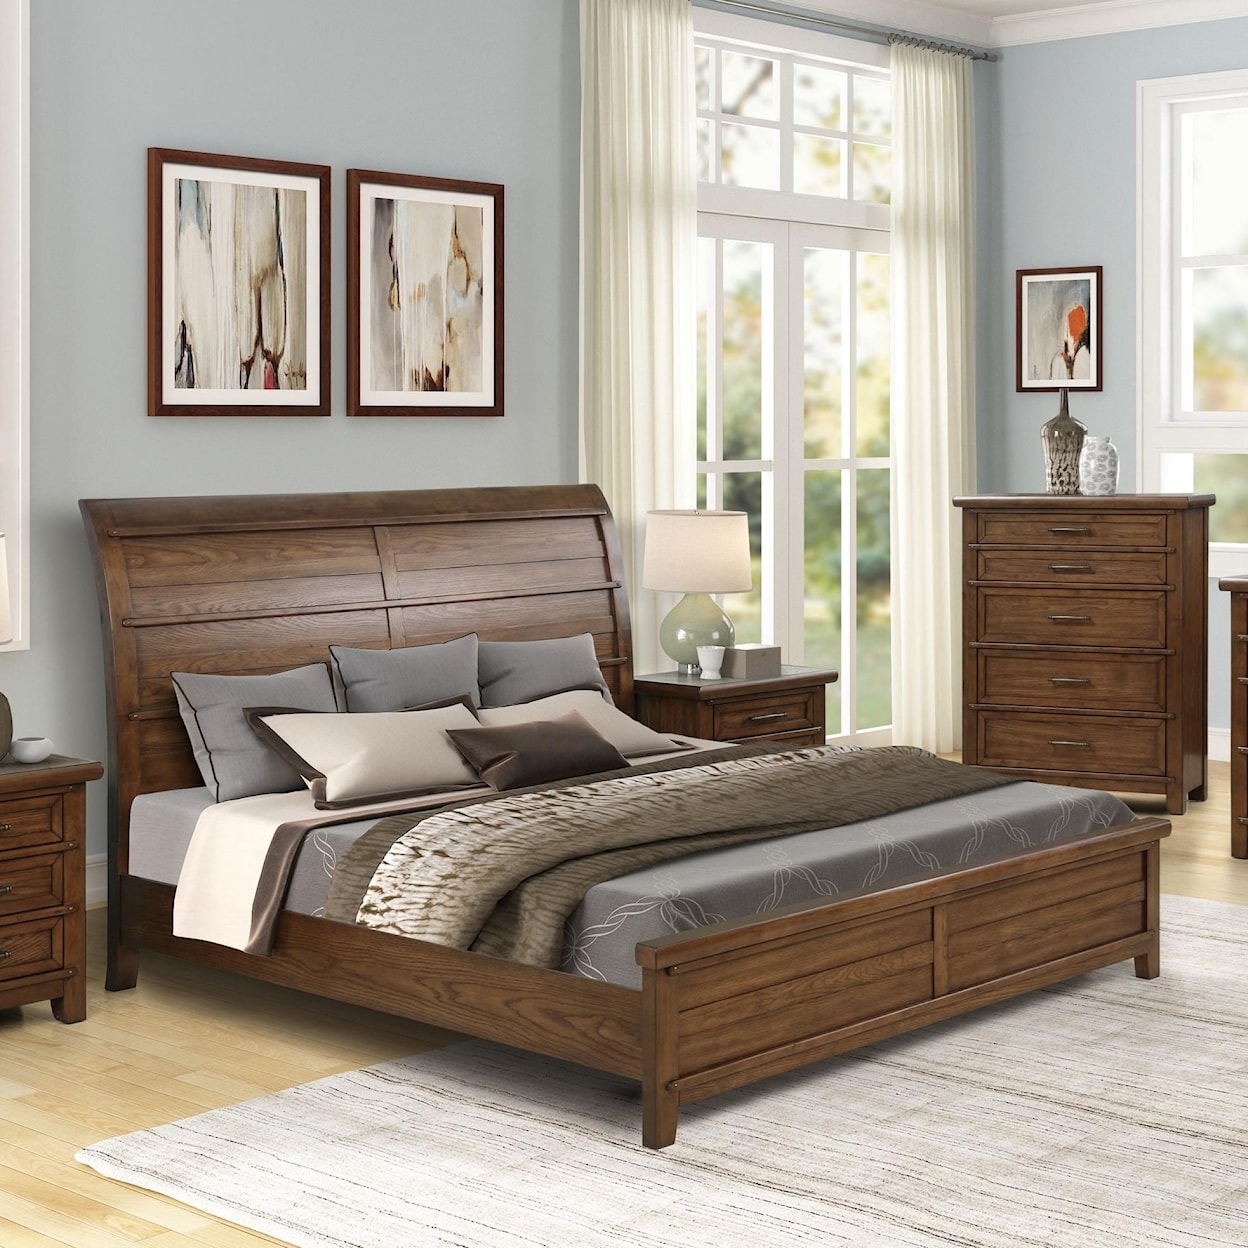 New Classic Furniture Fairfax County California King Sleigh Bed